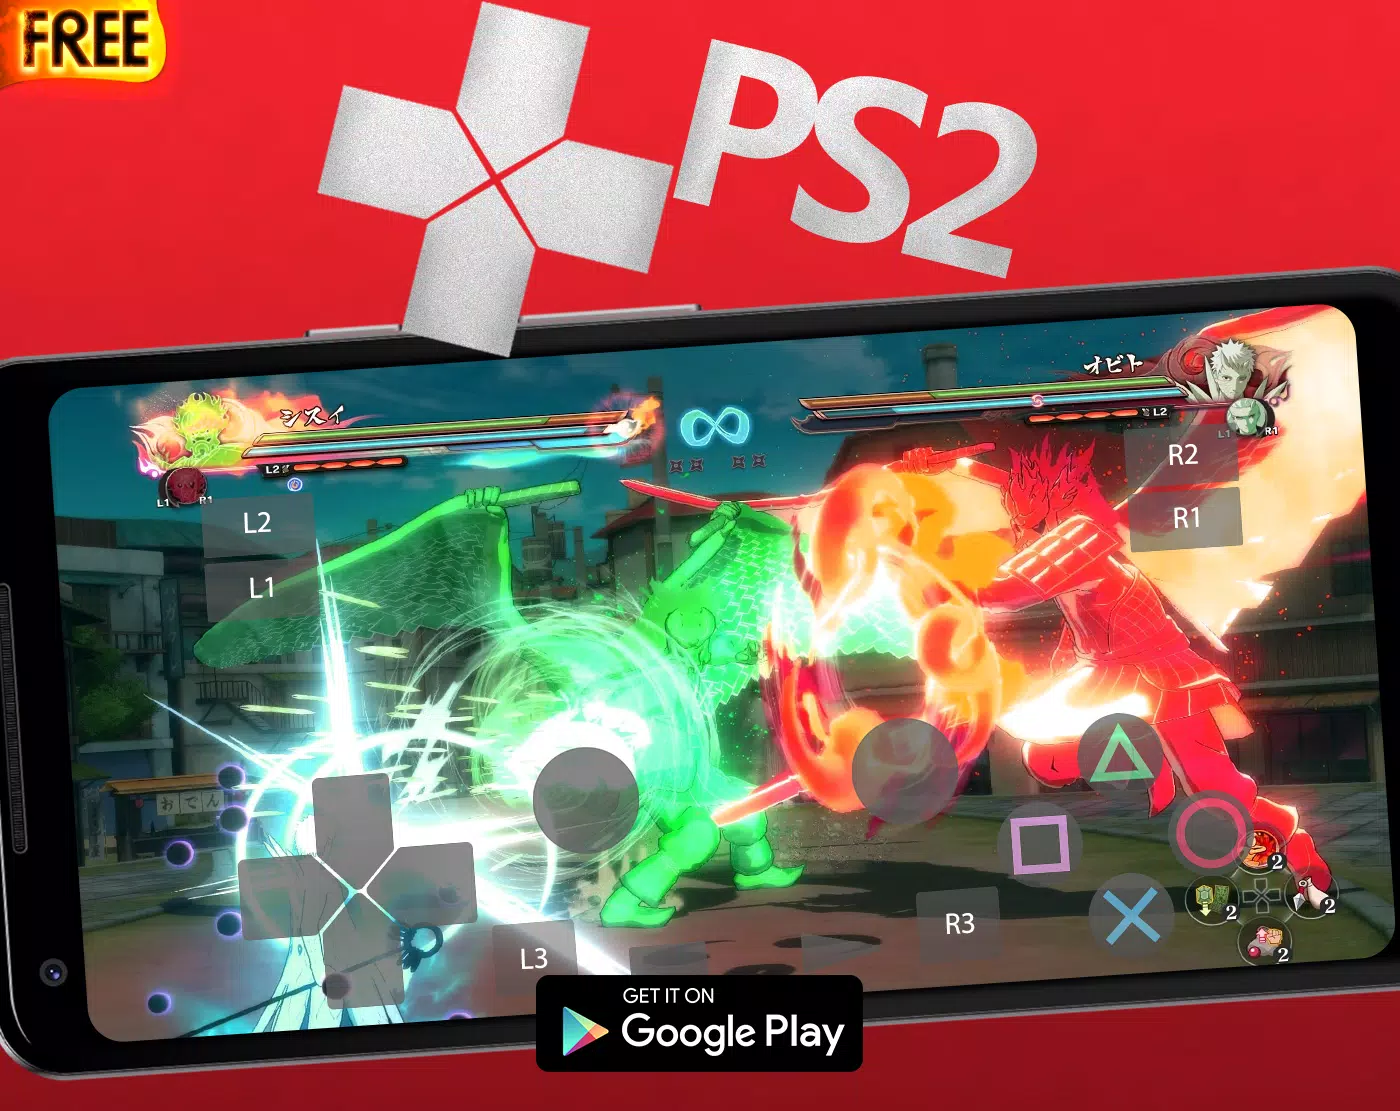 Playstation 2 Emulator PS 2 APK - Baixar app grátis para Android